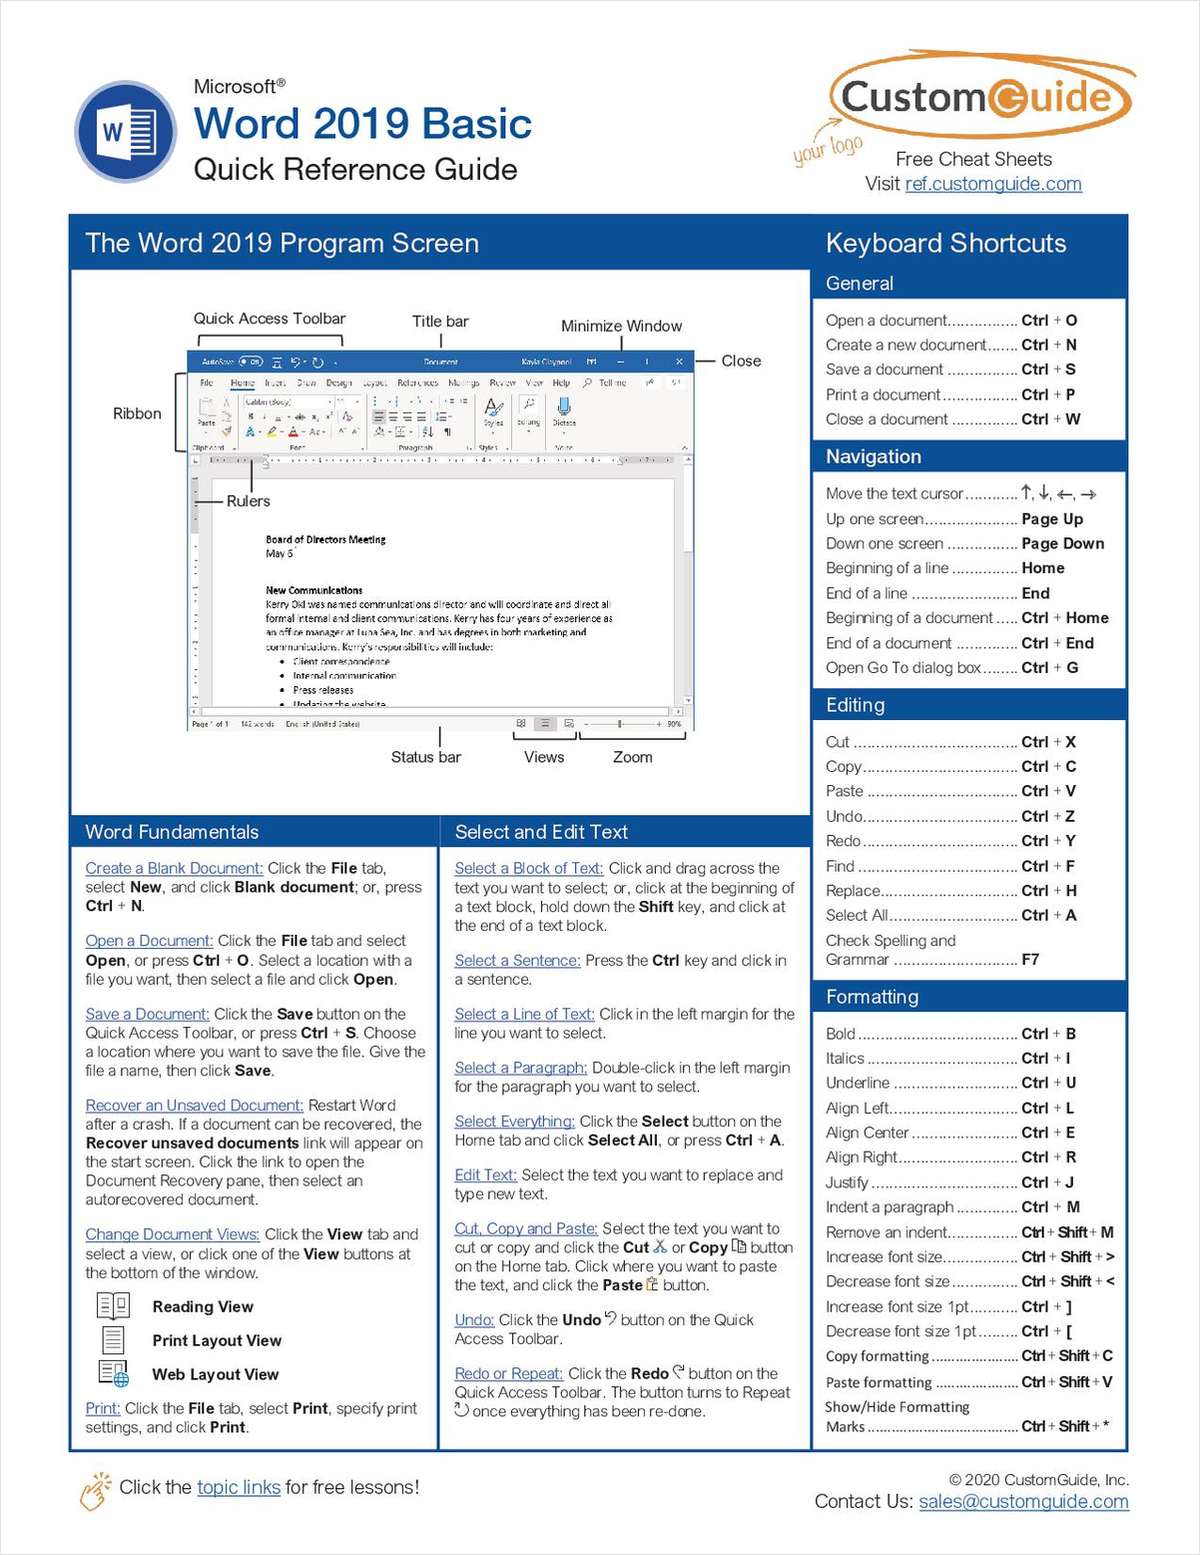 Microsoft Word 2019 Basic -- Free Reference Card